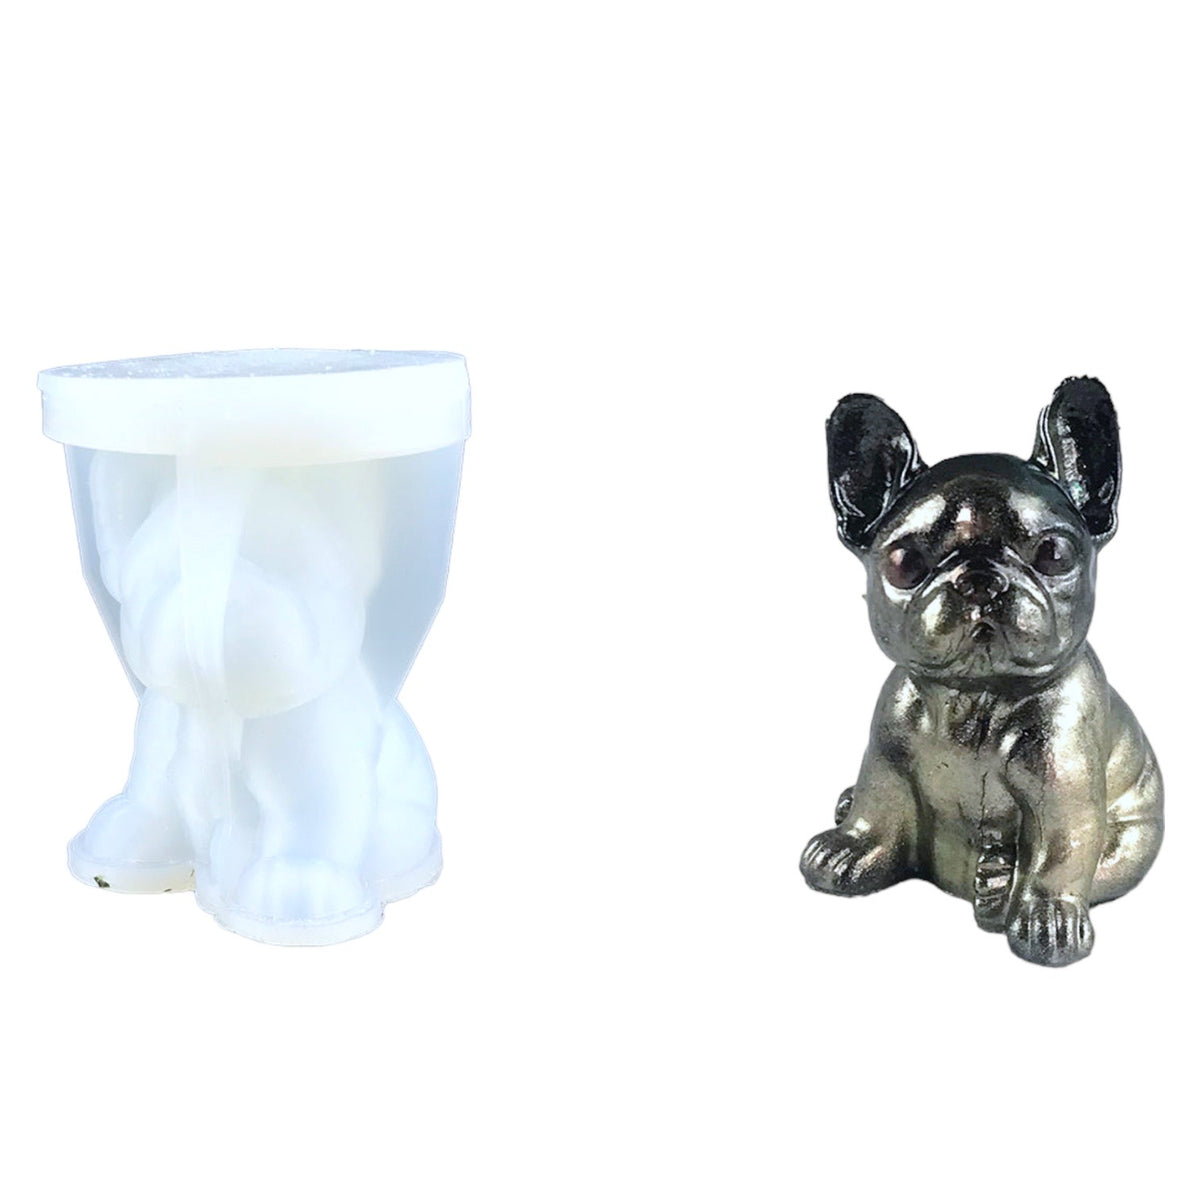 3D French Bulldog Mold for Epoxy Resin Art